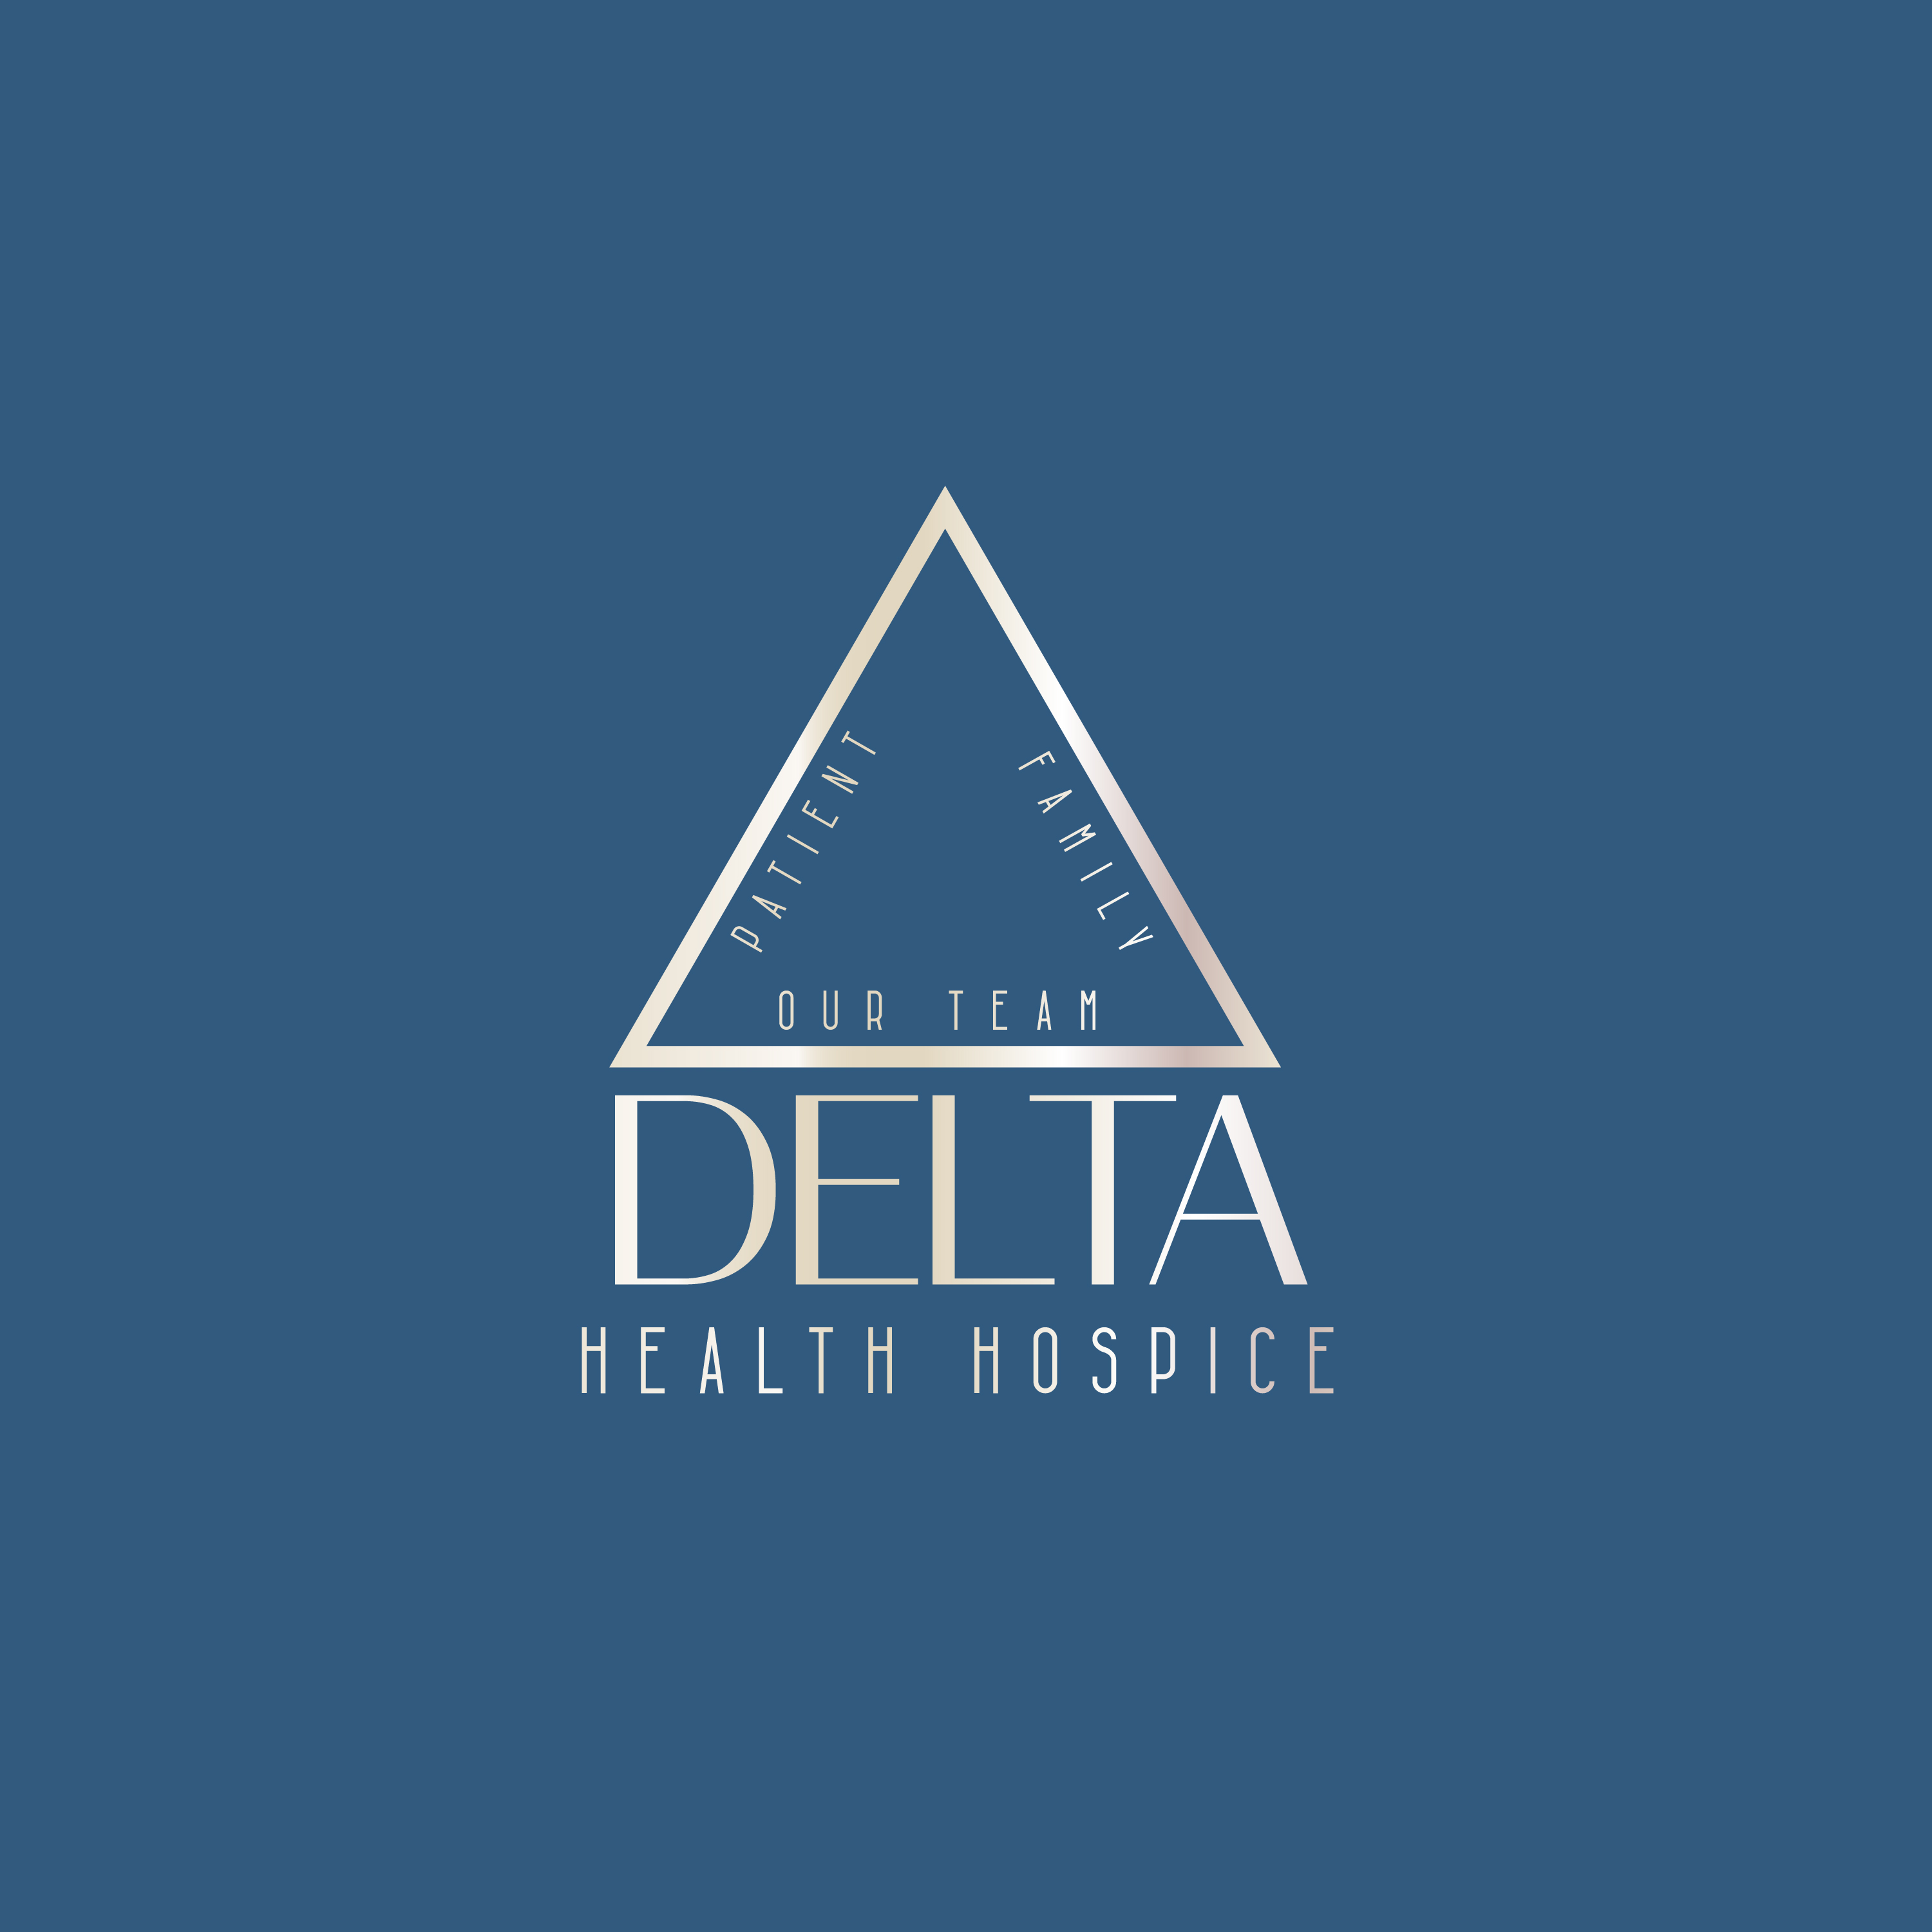 Delta Health Hospice